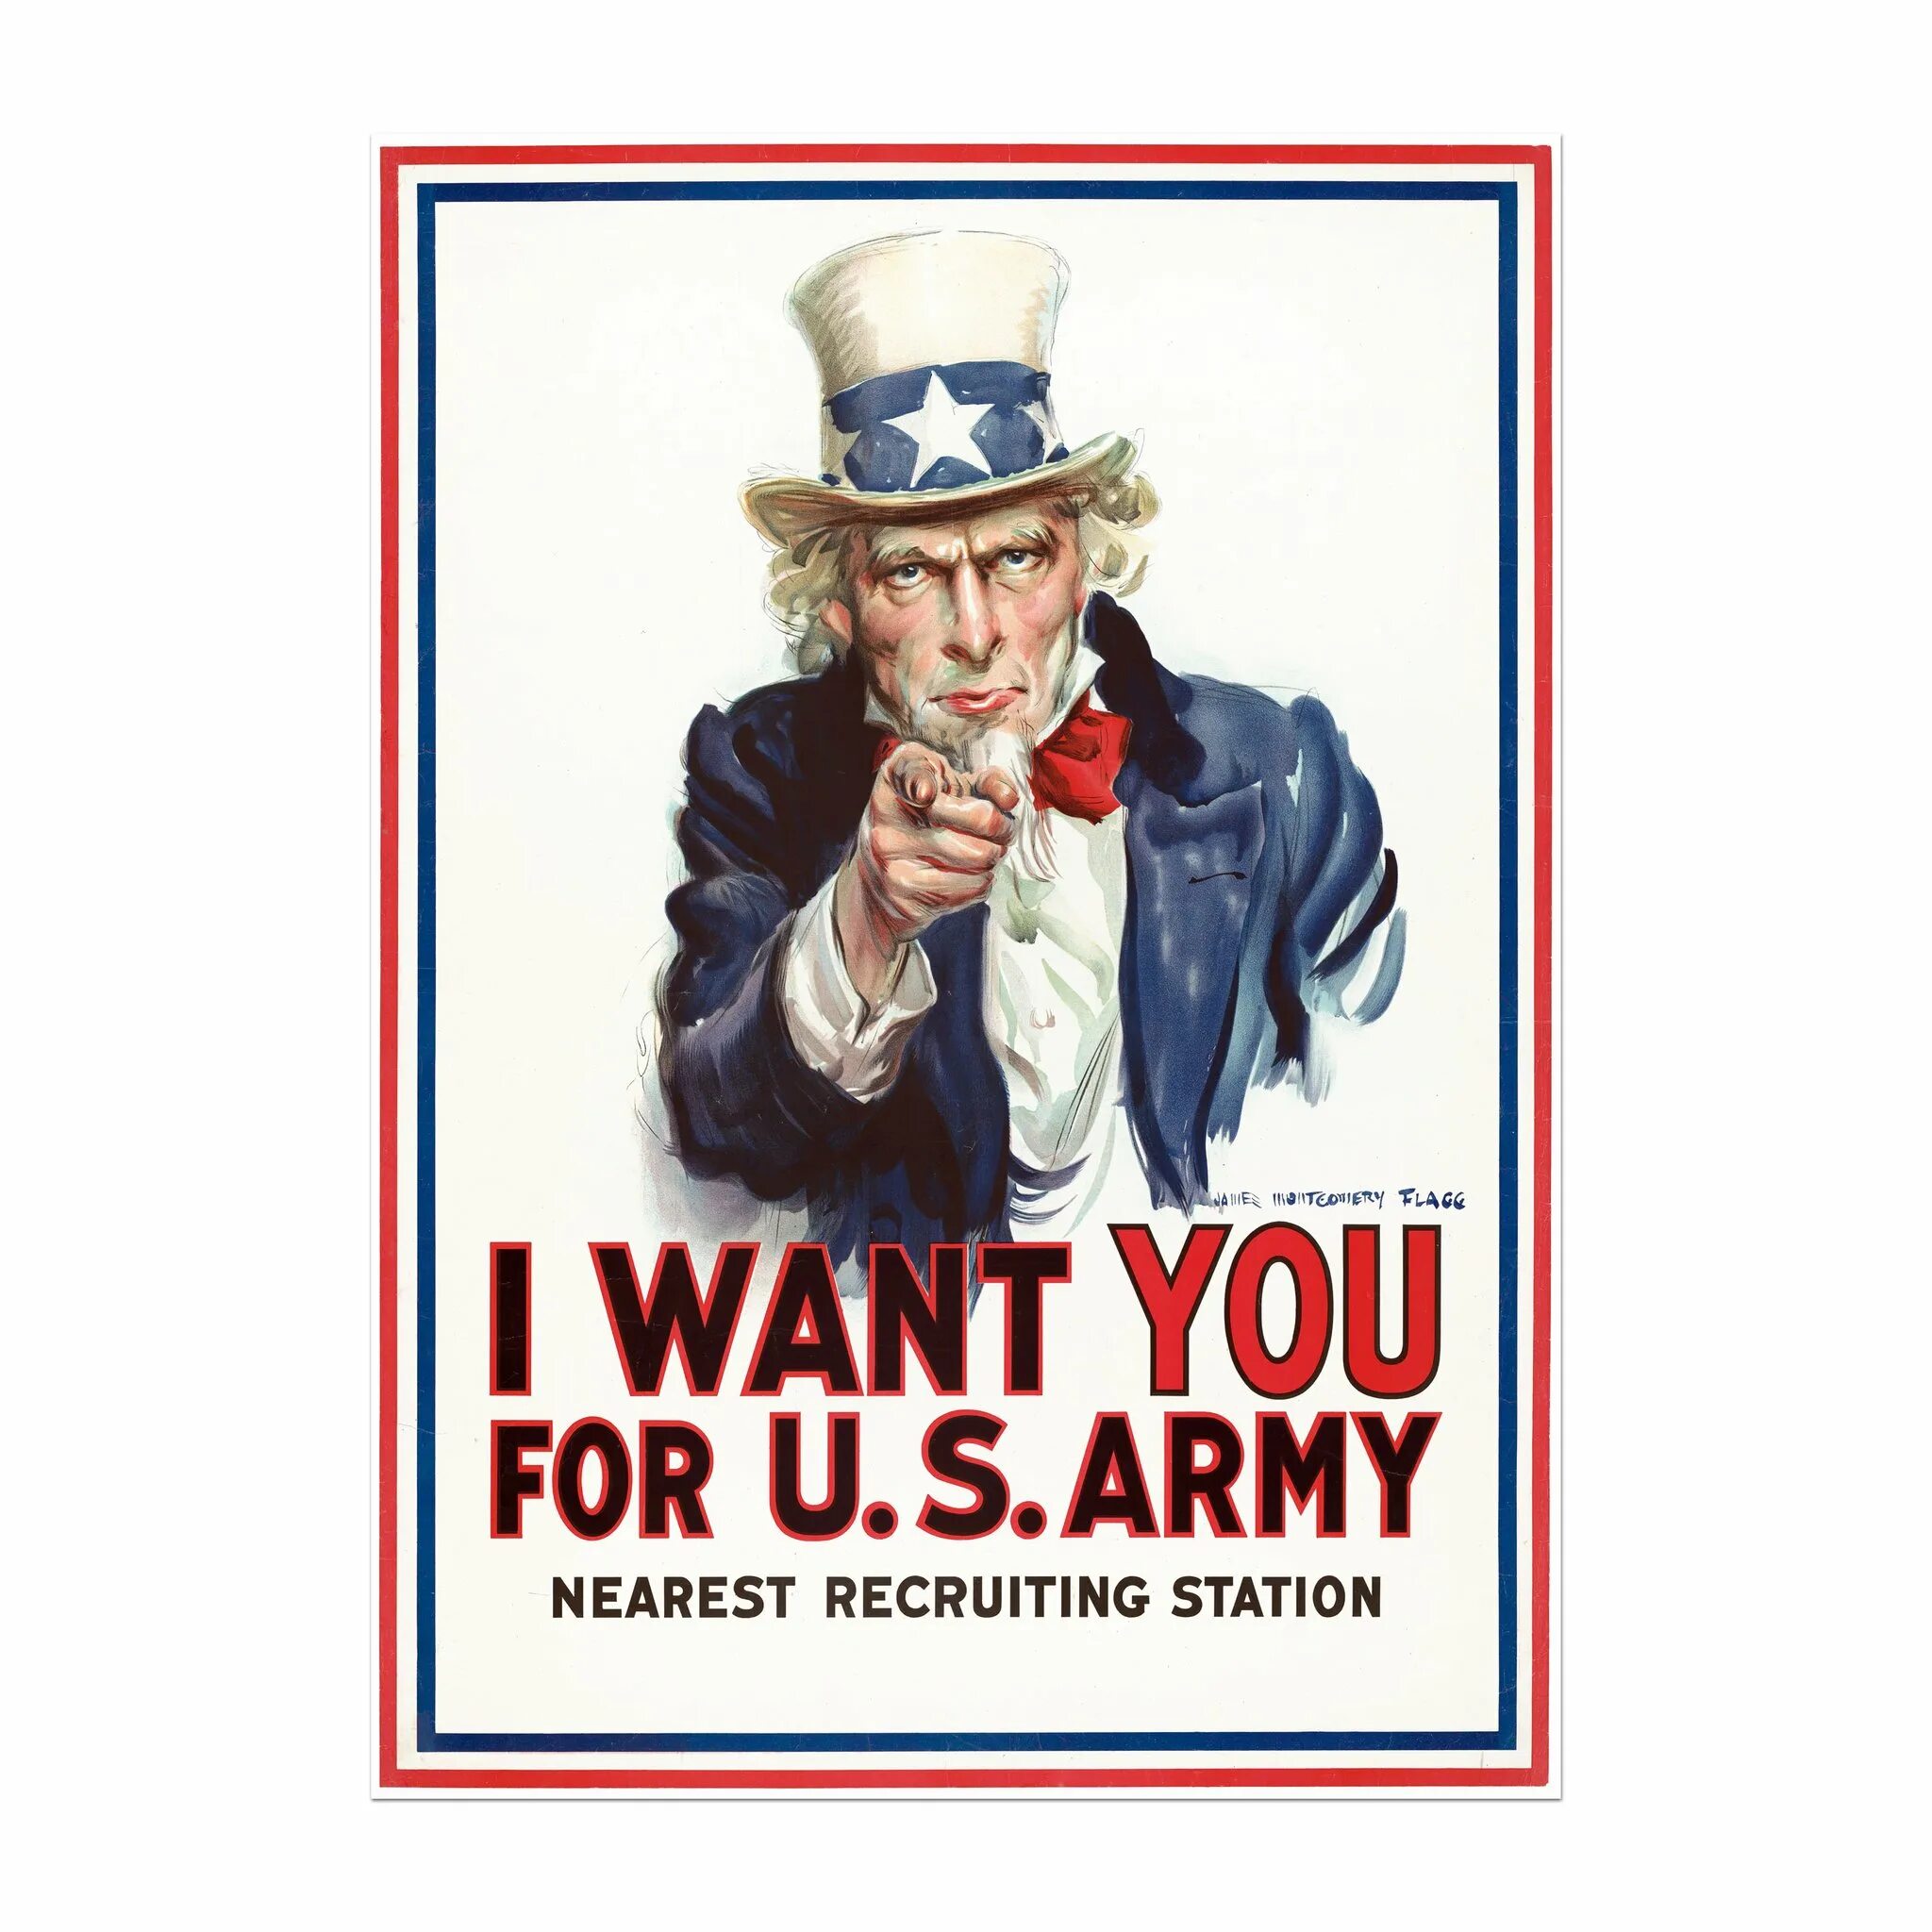 I want russia. I want you плакат. Американские плакаты. Ты нужен американской армии. Дядя Сэм плакат.